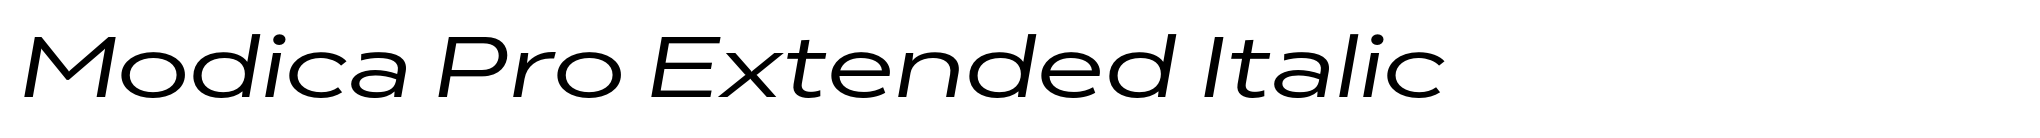 Modica Pro Extended Italic image